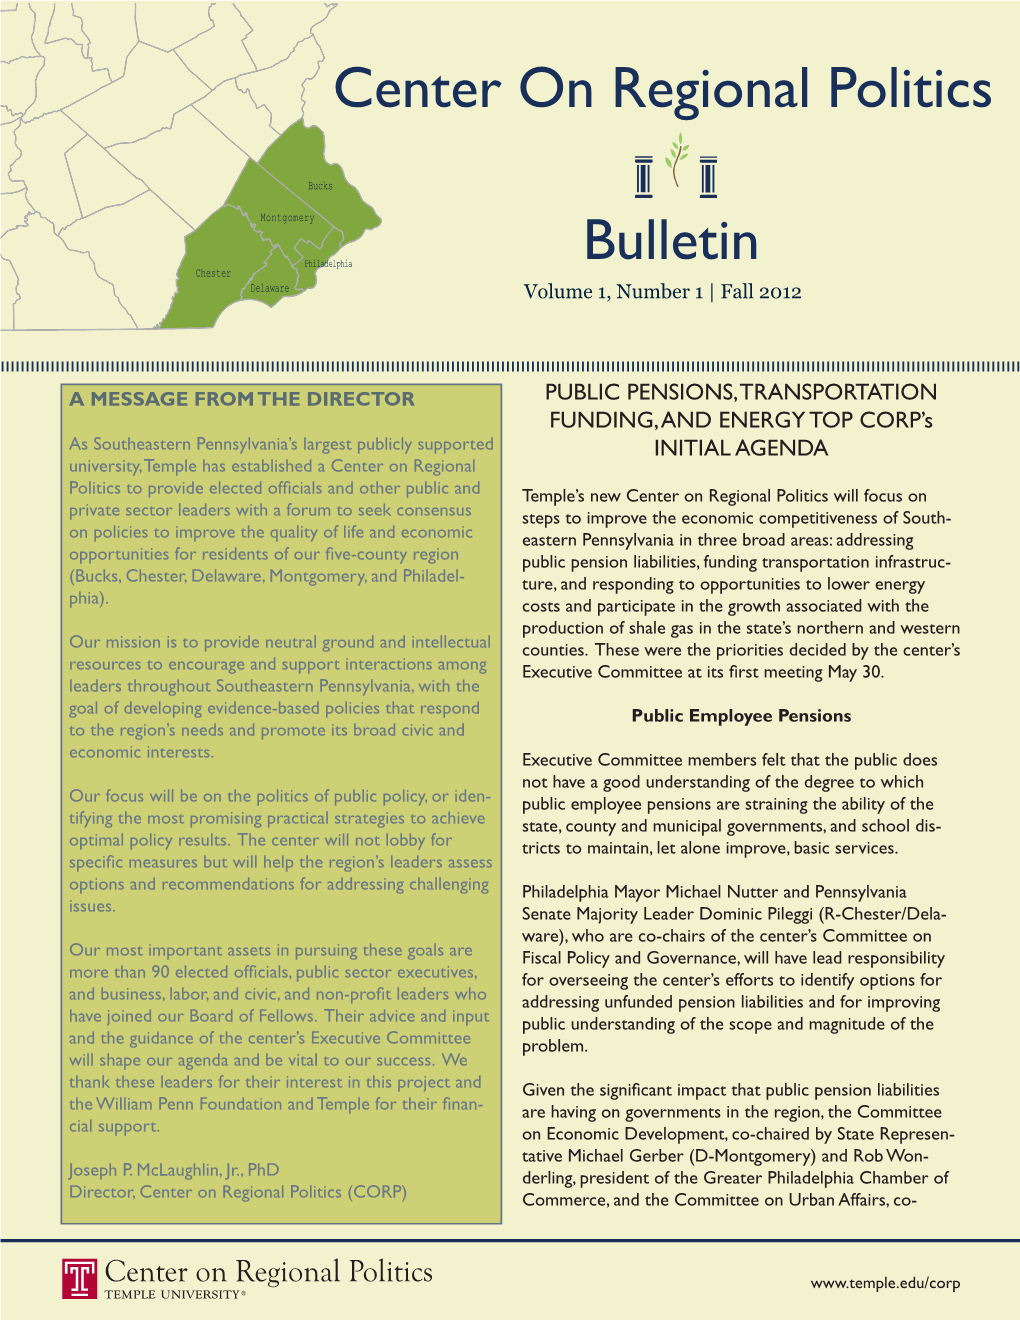 Center on Regional Politics Bulletin | Volume 1, Number 1| Fall 2012